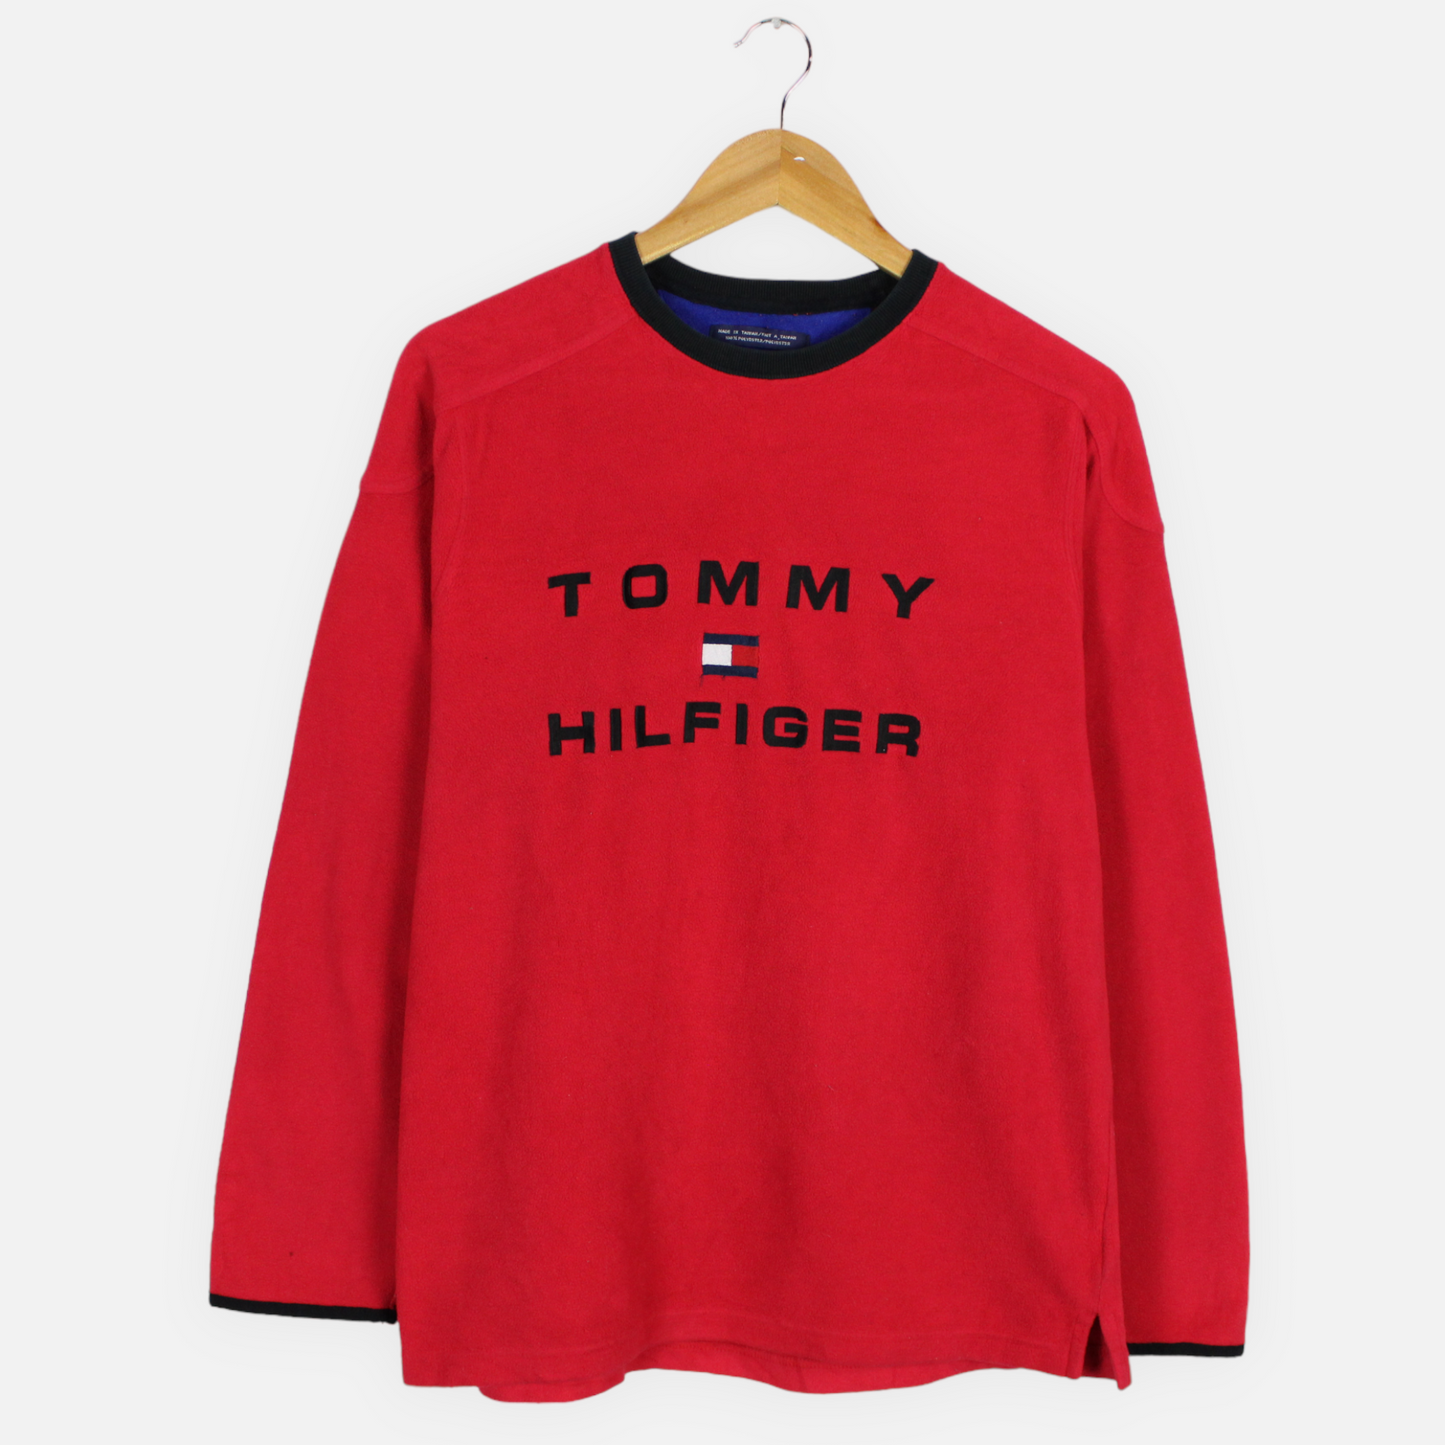 Vintage Tommy Hilfiger Spellout Fleece - M